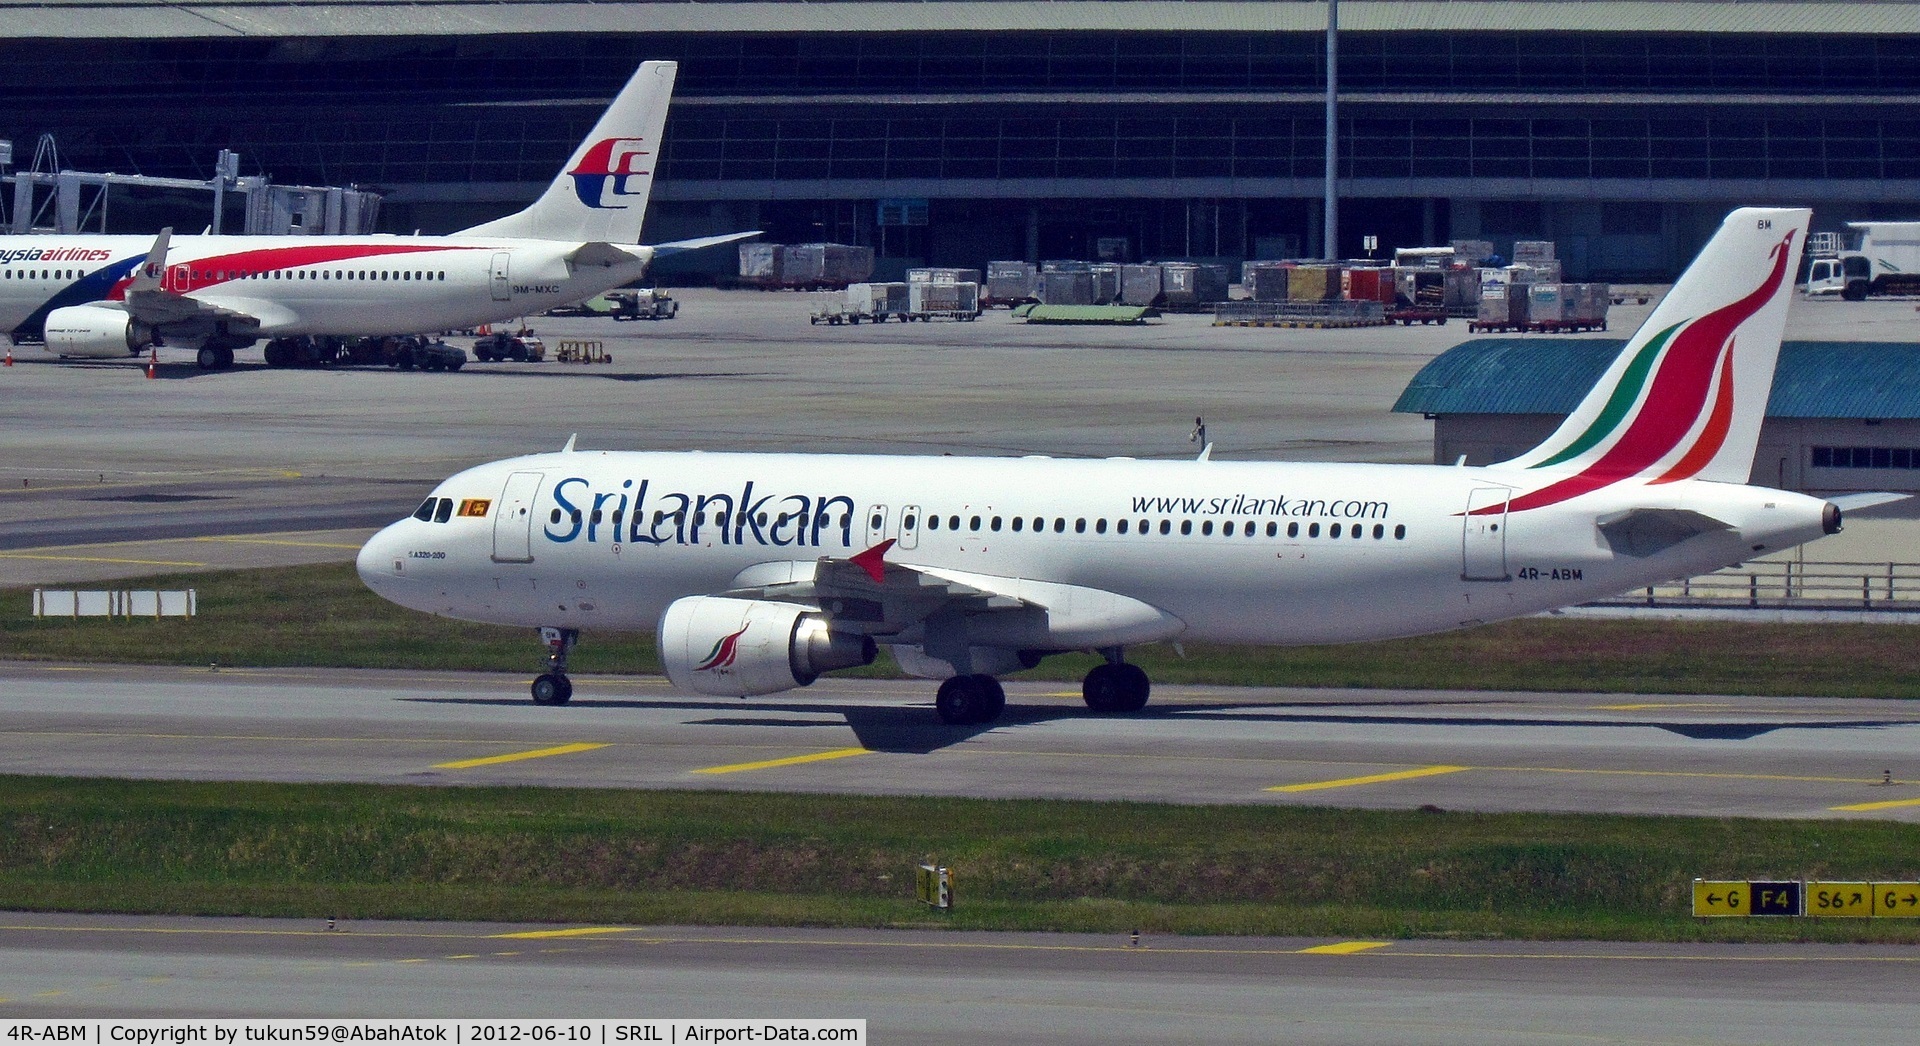 4R-ABM, 2011 Airbus A320-214 C/N 4694, SriLankan Airlines